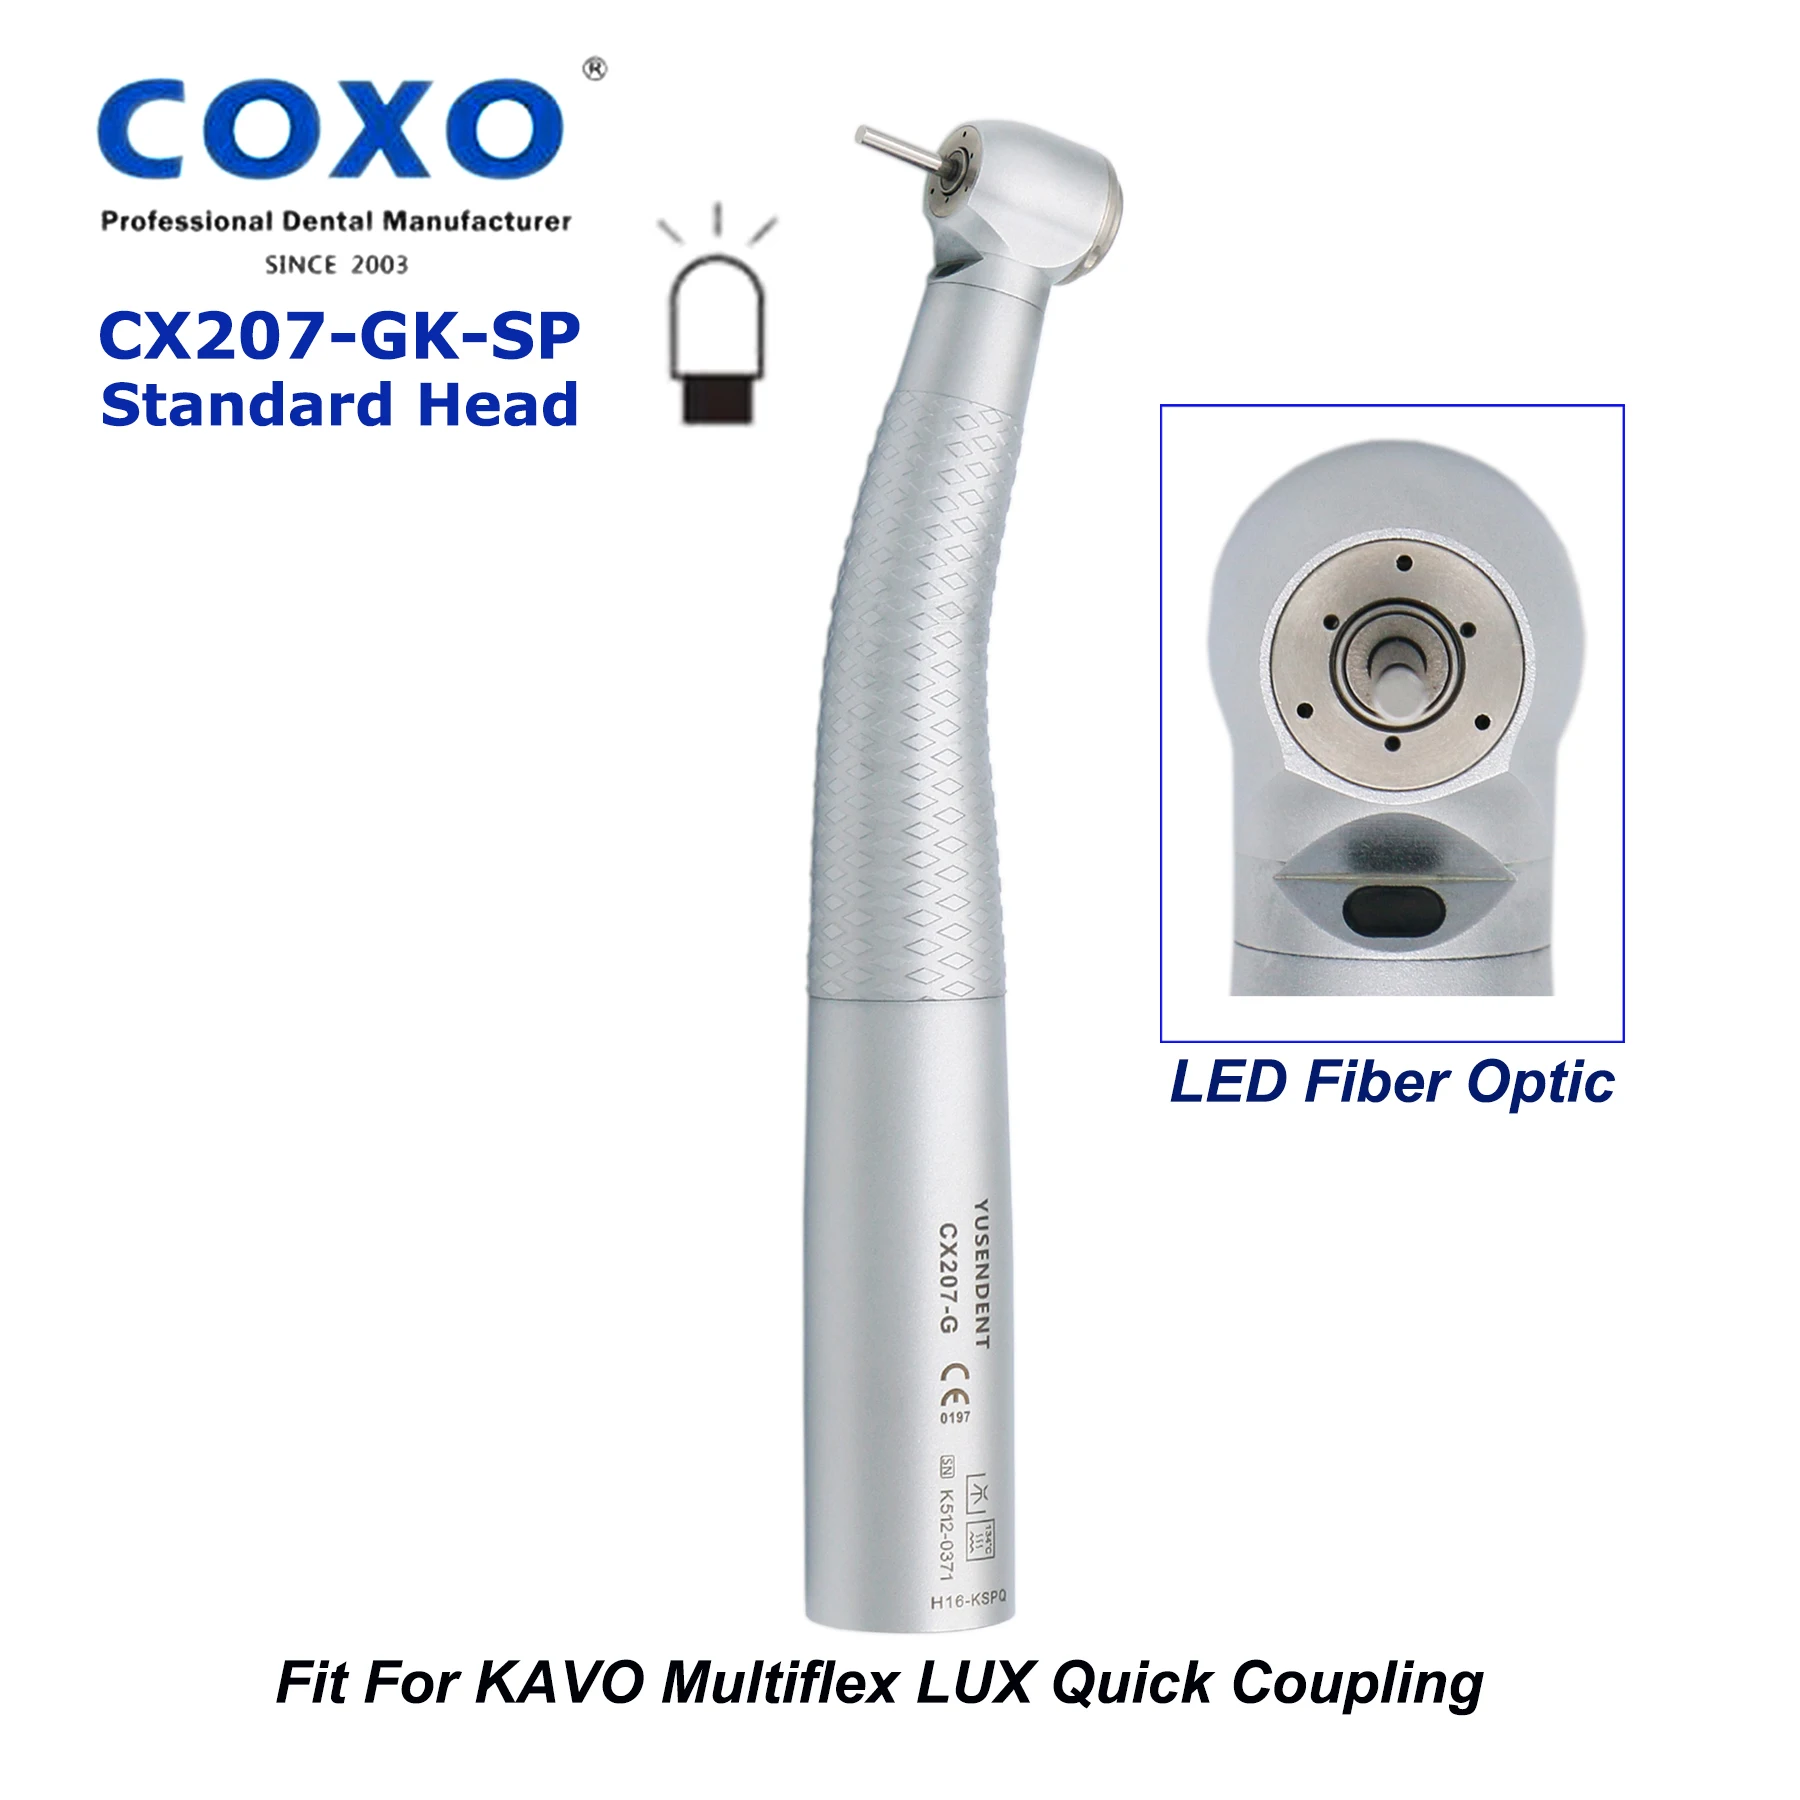 

COXO YUSENDENT Dental High Speed LED Fiber Optic Turbine illumination Standard Head Handpiece For KaVo Multiflex LUX Coupling